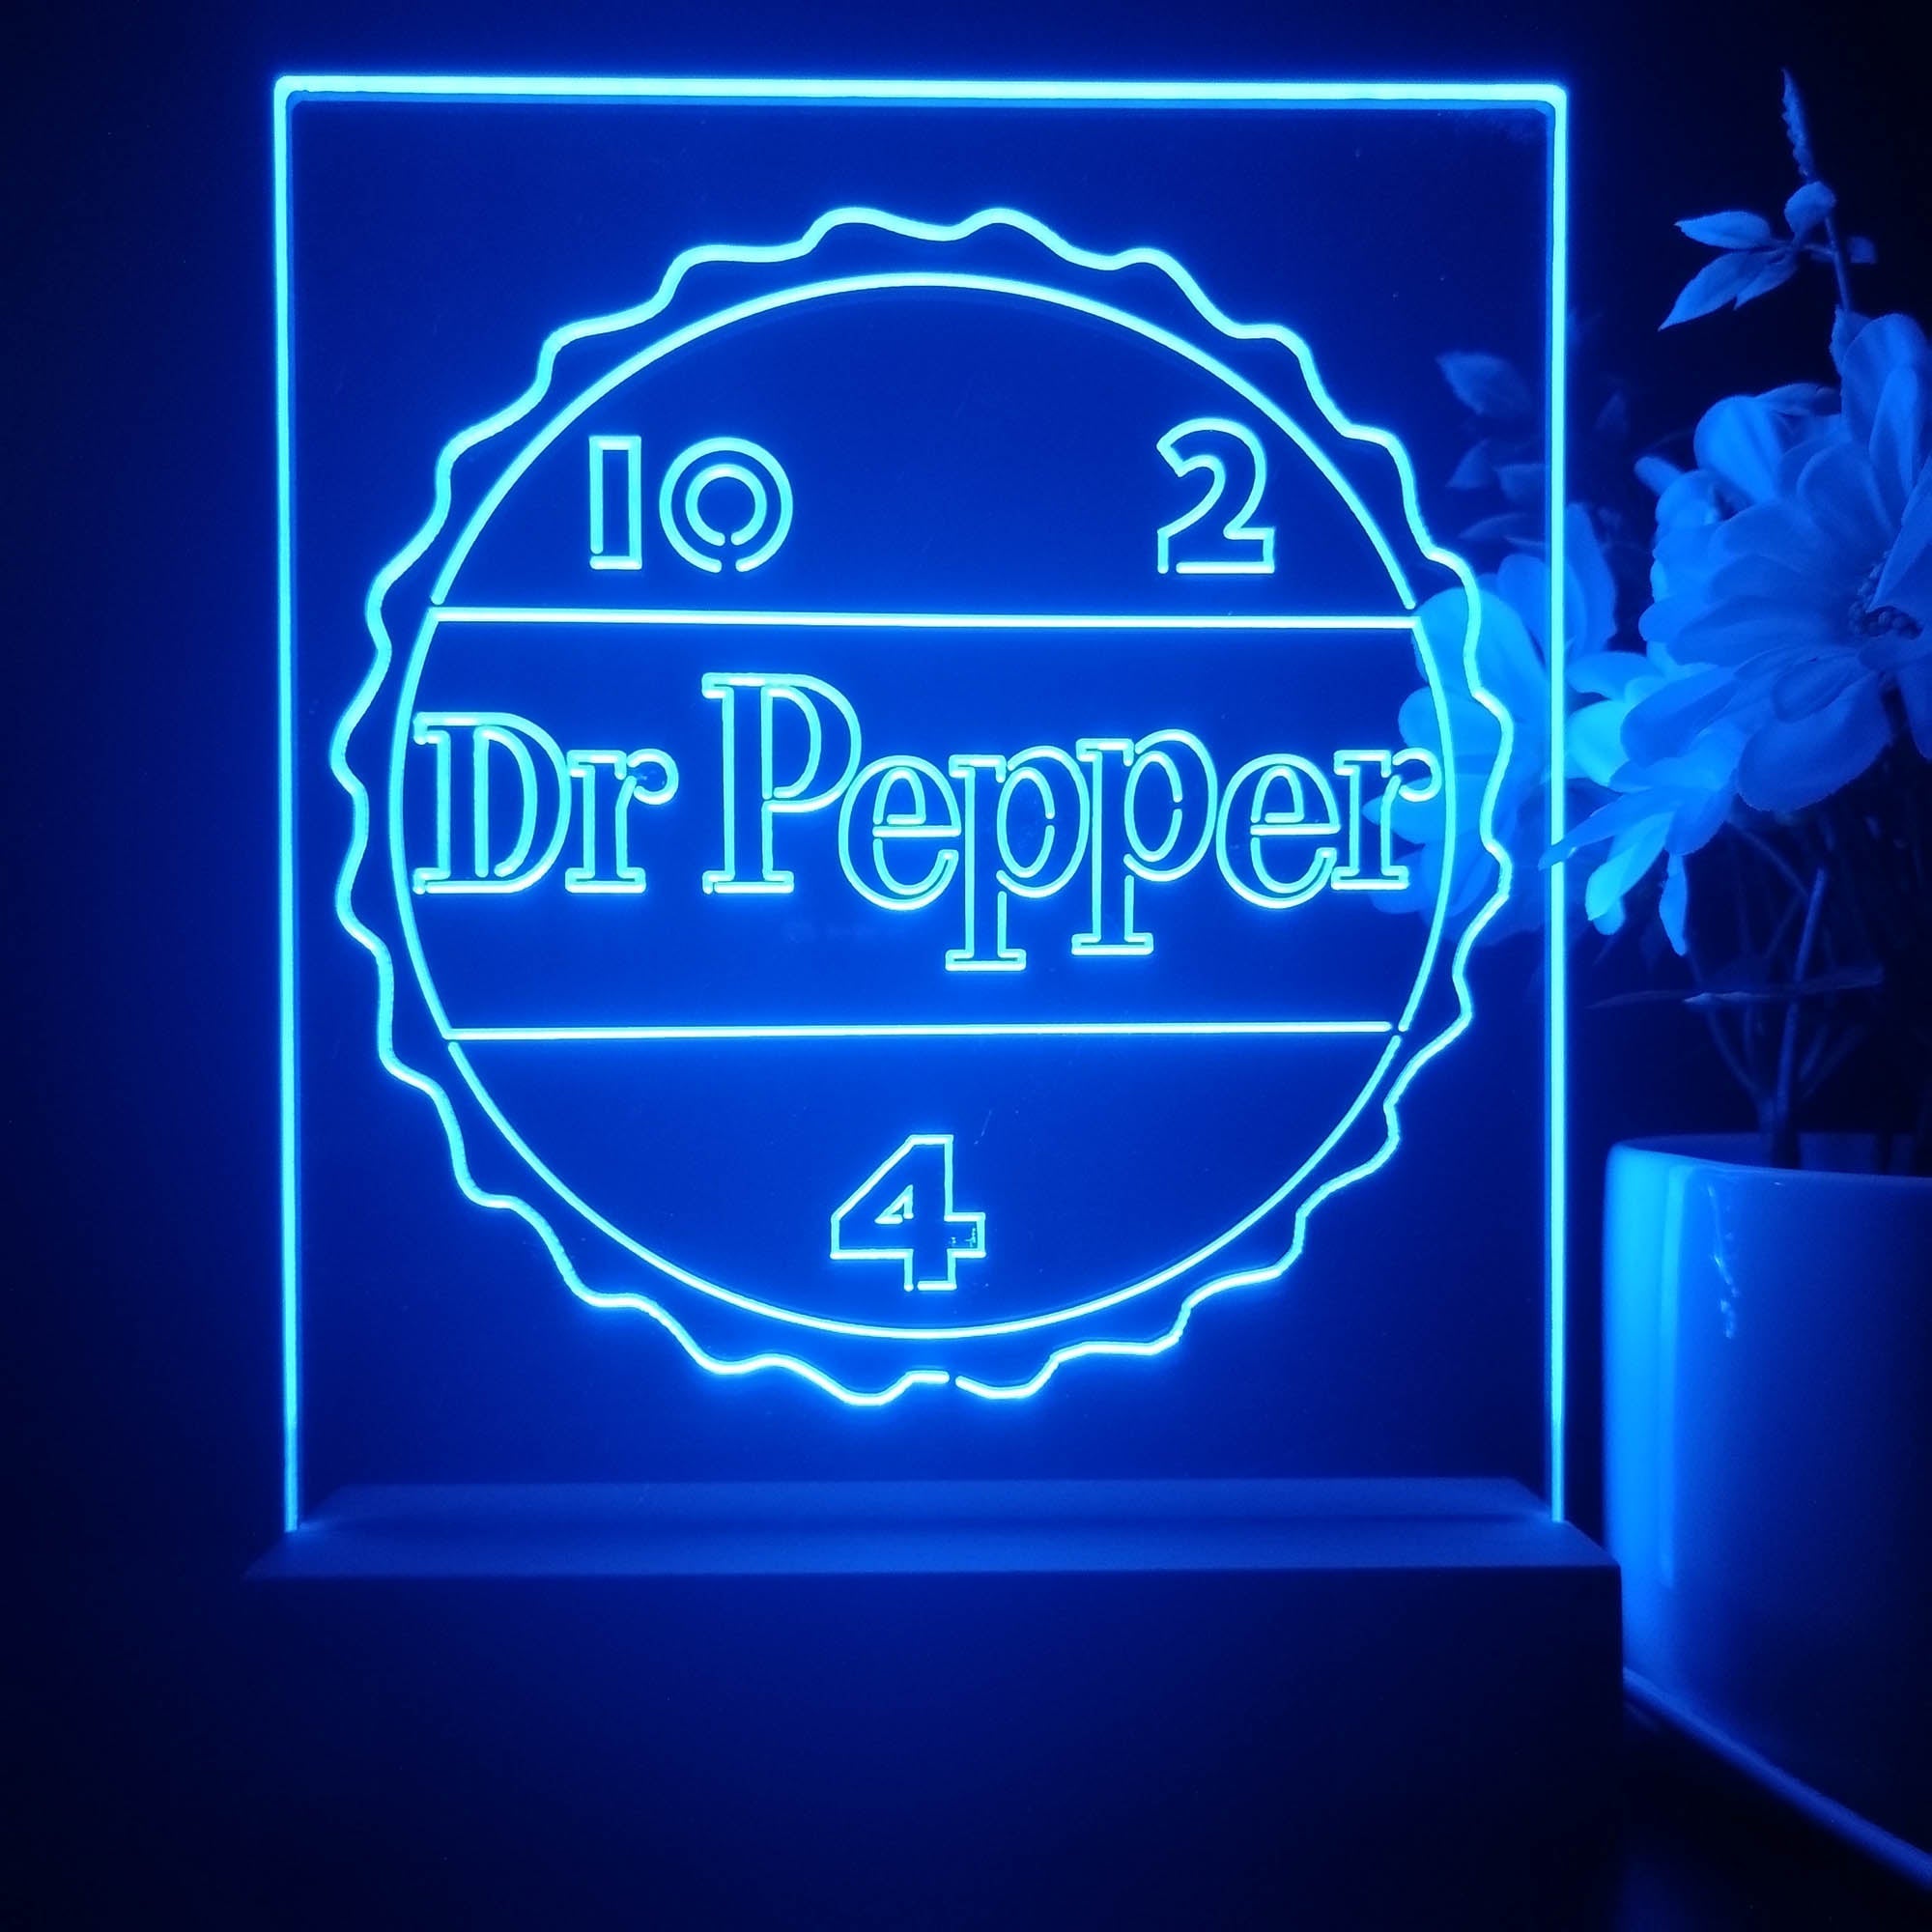 Dr Pepper 10 2 4 Drink 3D Illusion Night Light Desk Lamp